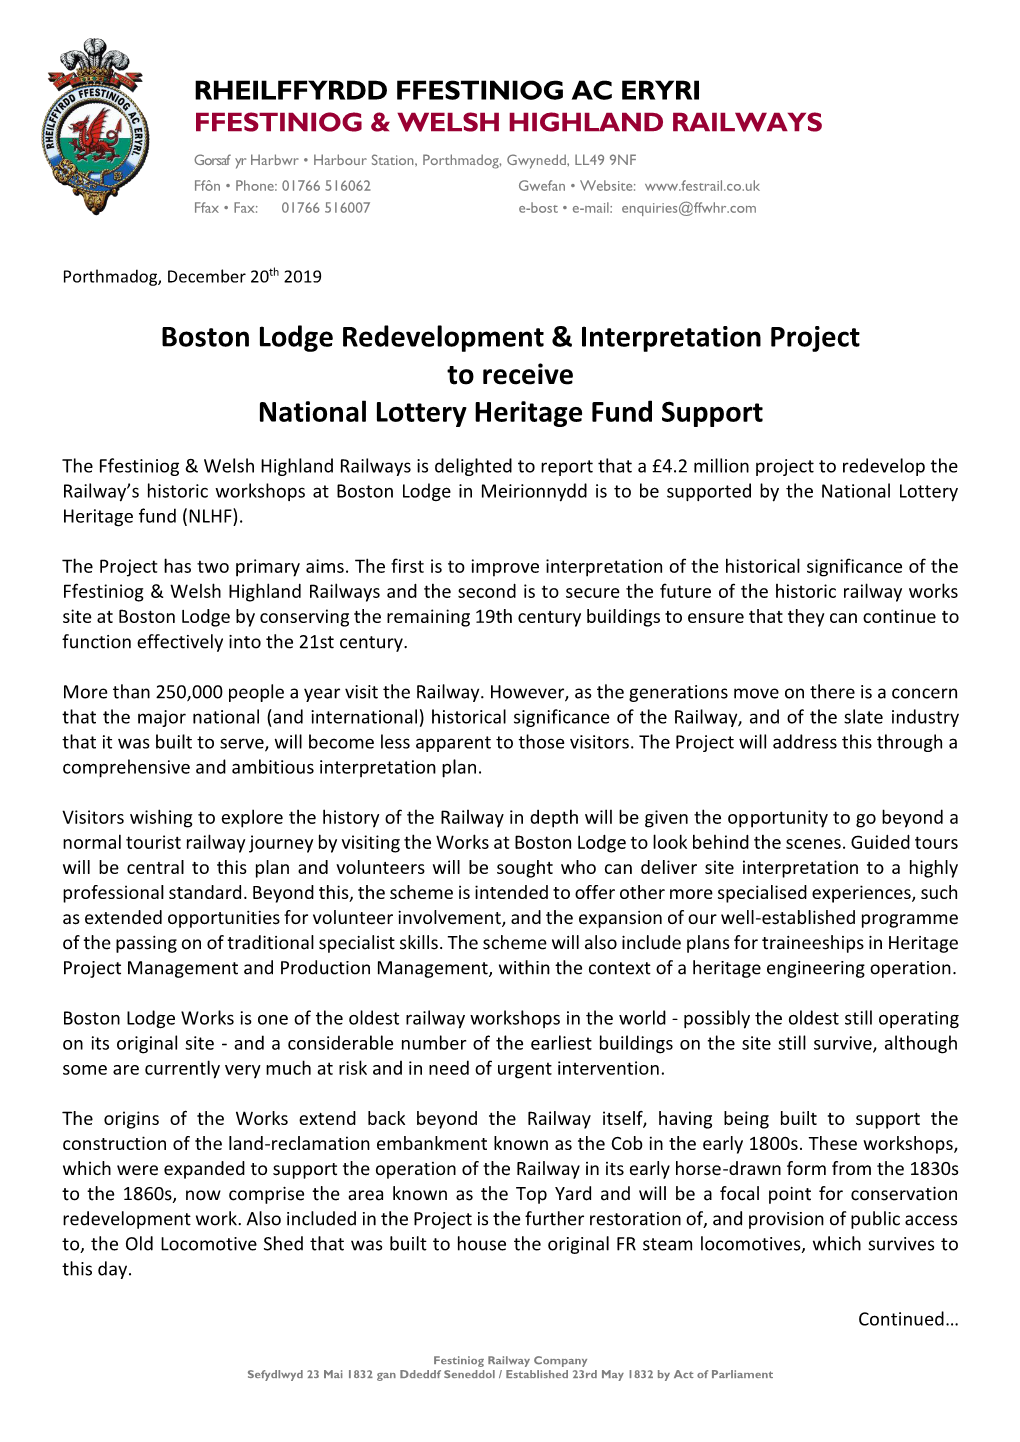 Boston Lodge Redevelopment & Interpretation Project to Receive